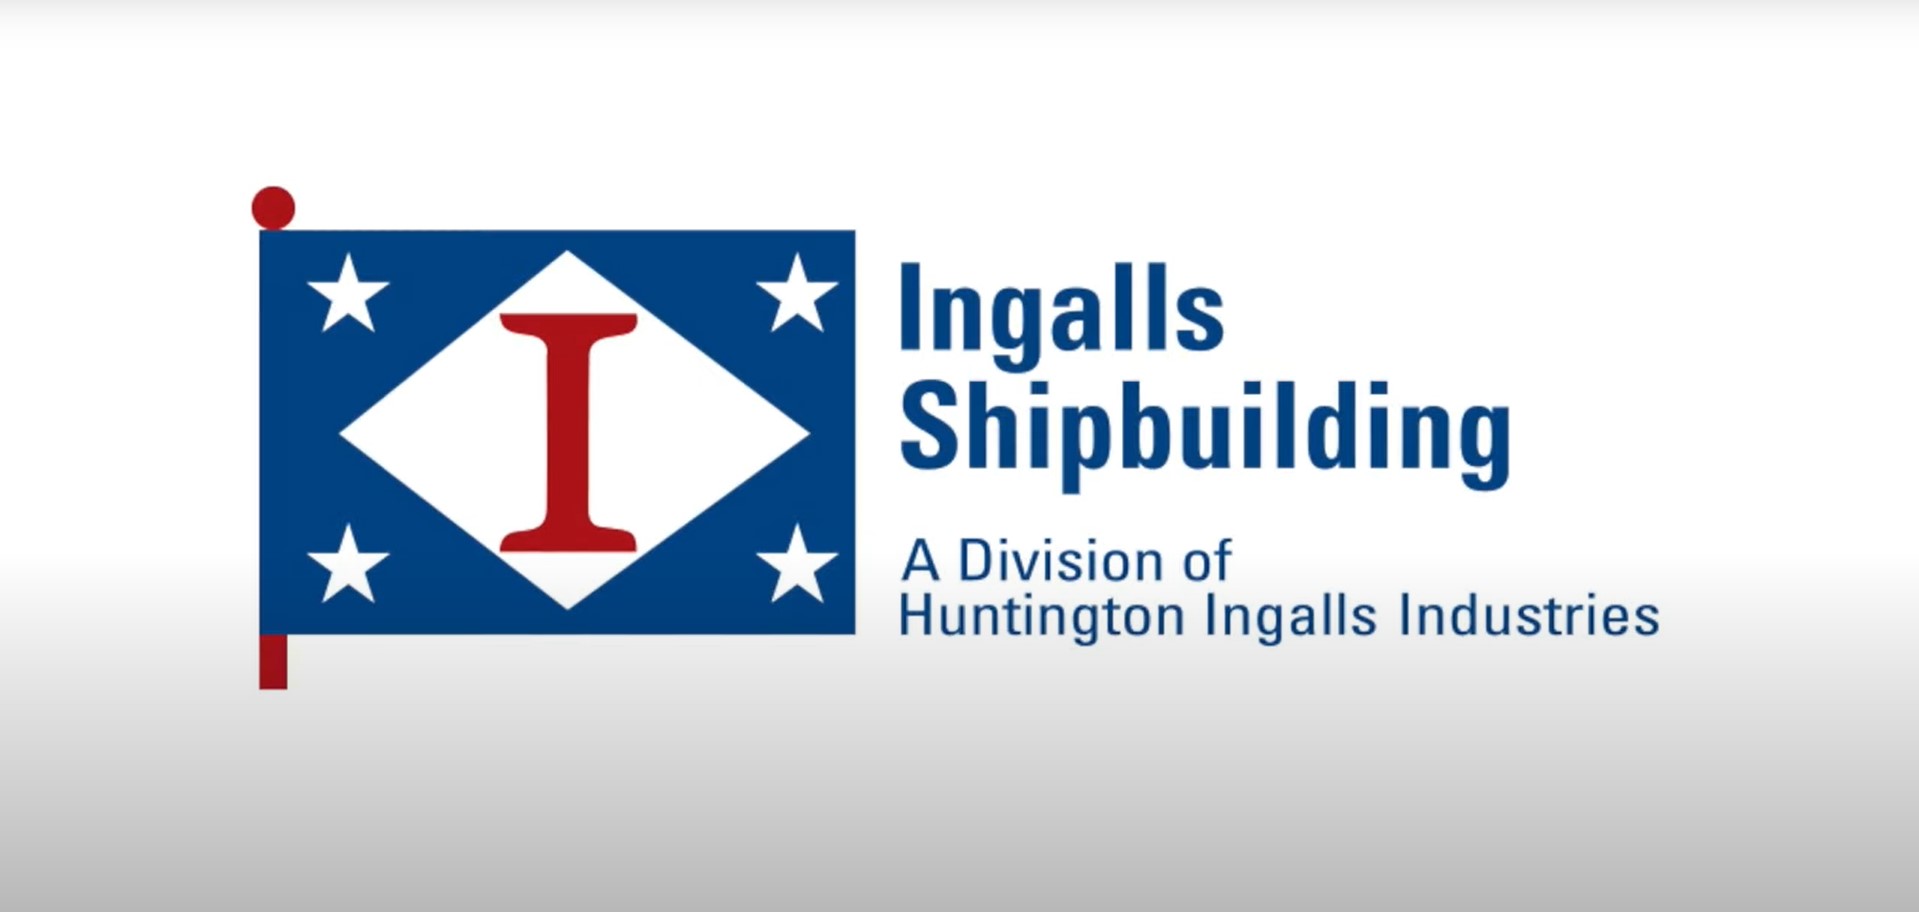 Ingalls Shipbuilding A Division of Huntington Ingalls Industries